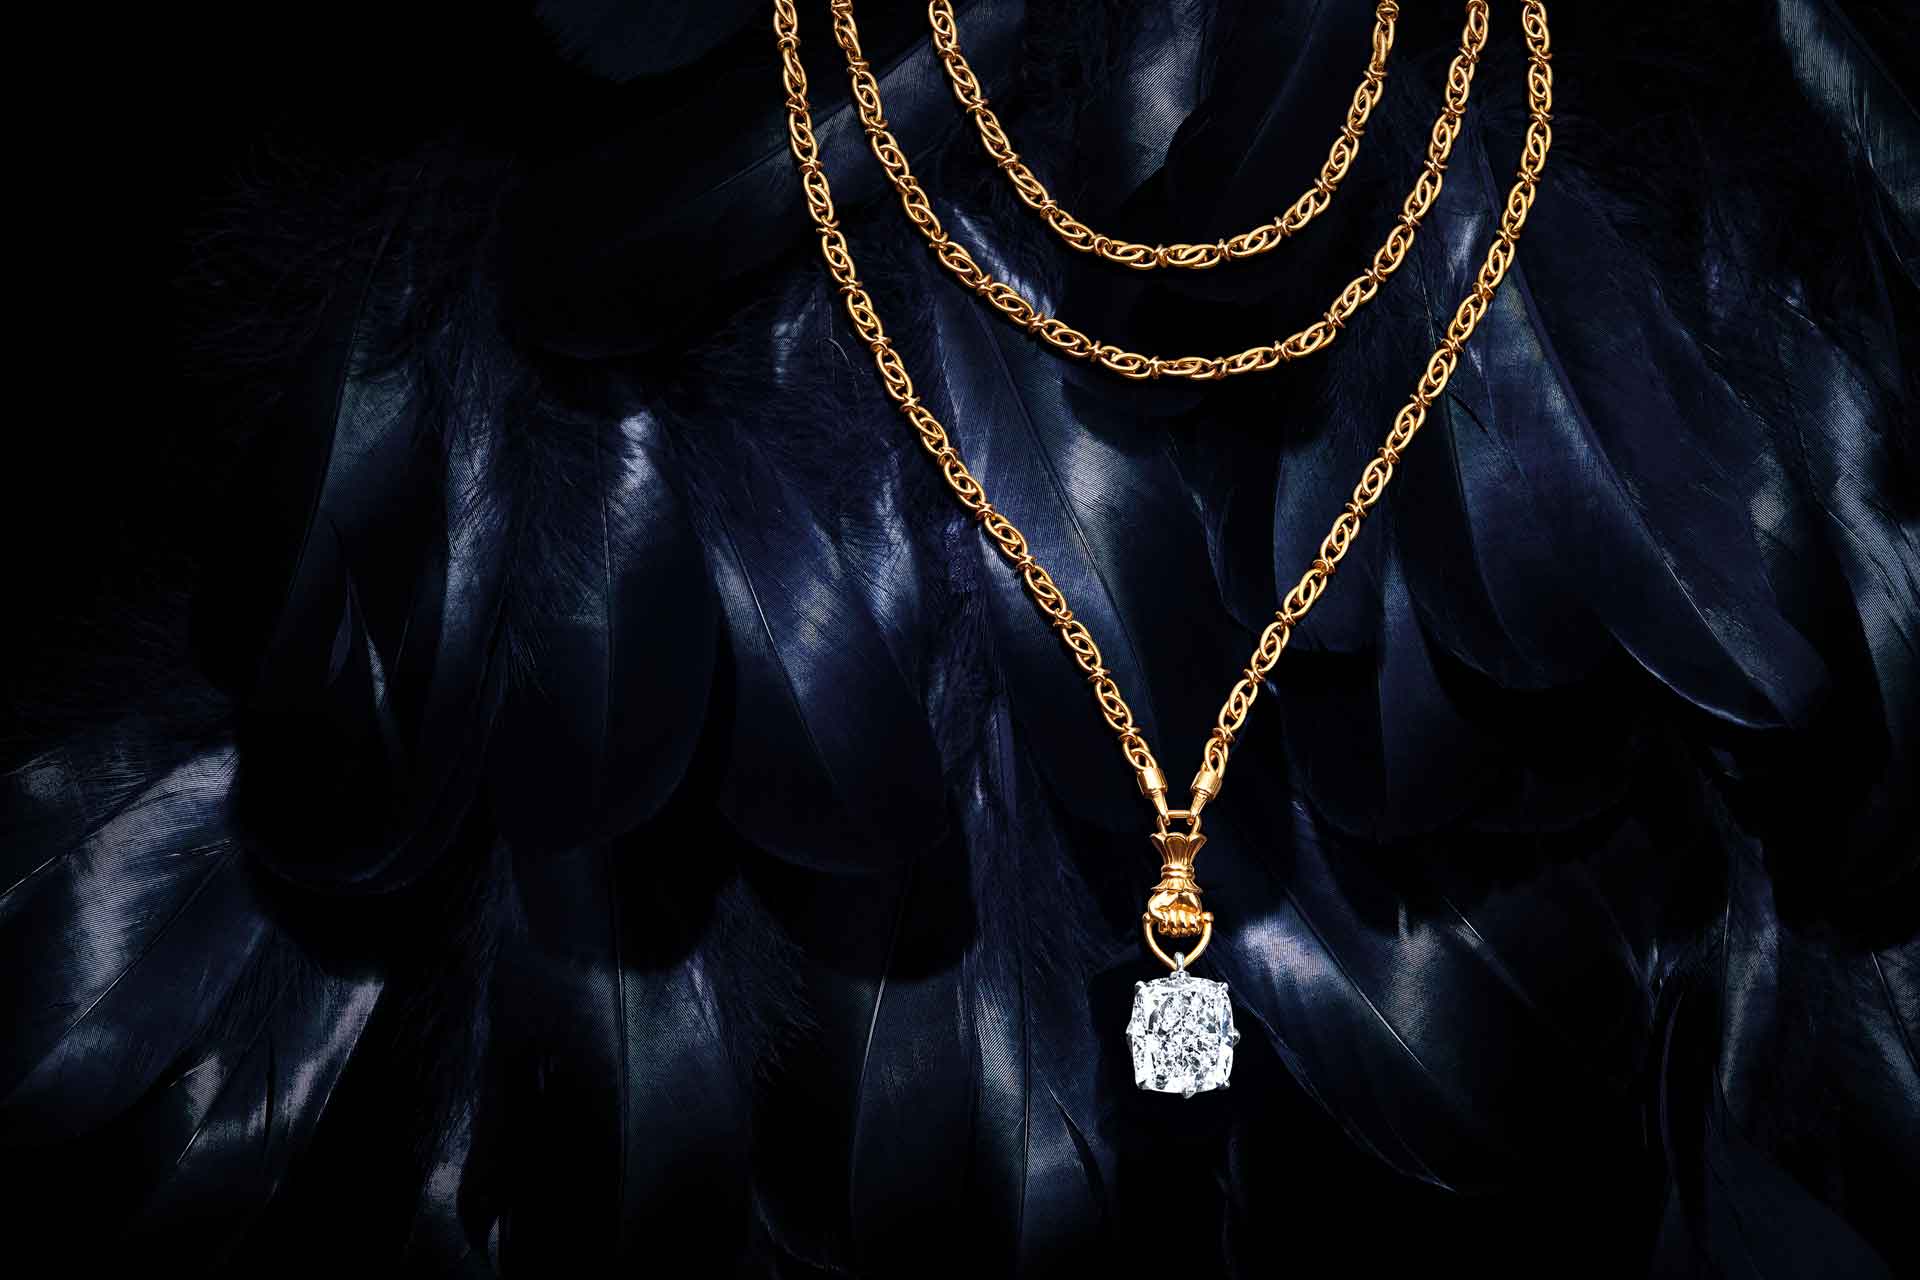 Square cut diamond necklace against a black background